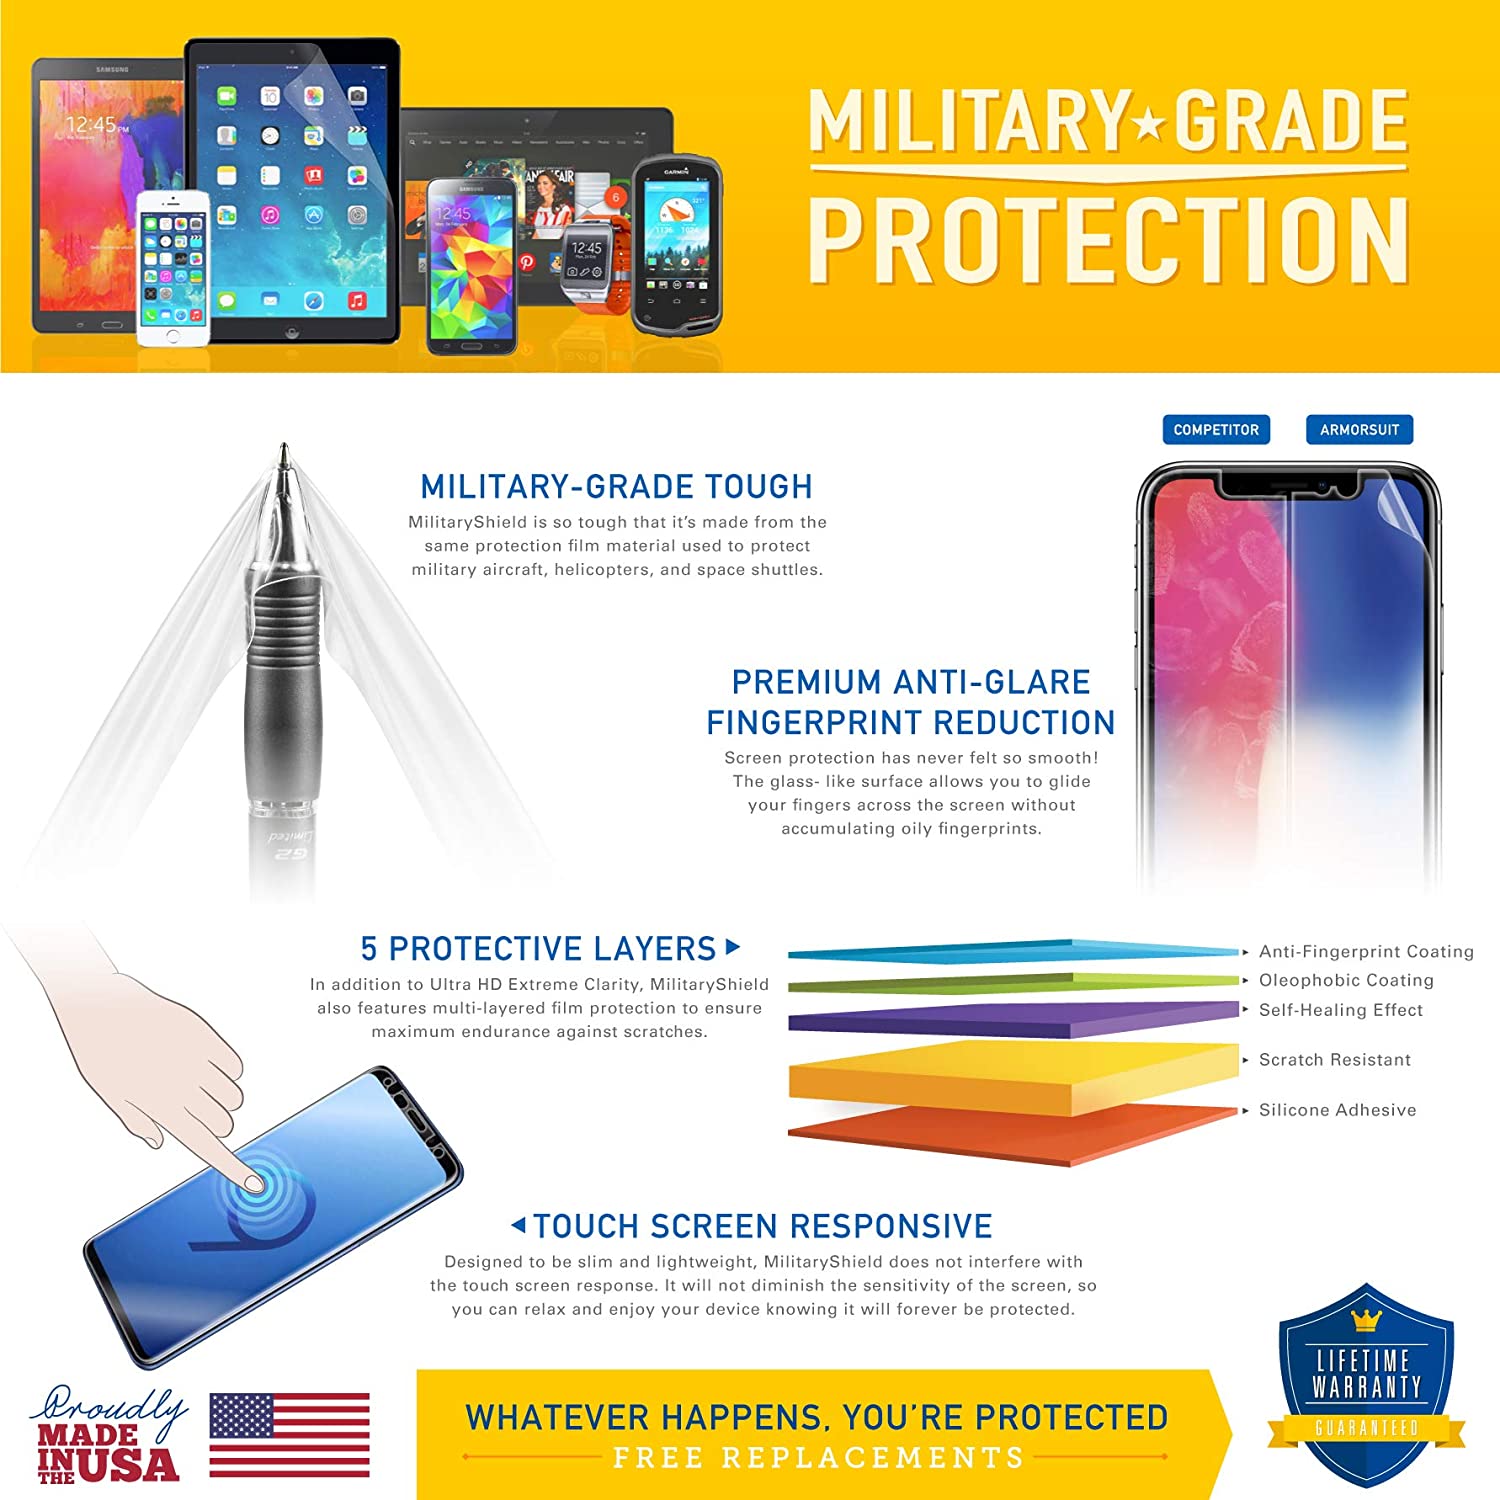 Alcatel Onetouch Smartwatch Anti-Glare (Matte) Screen Protector [2-Pack]